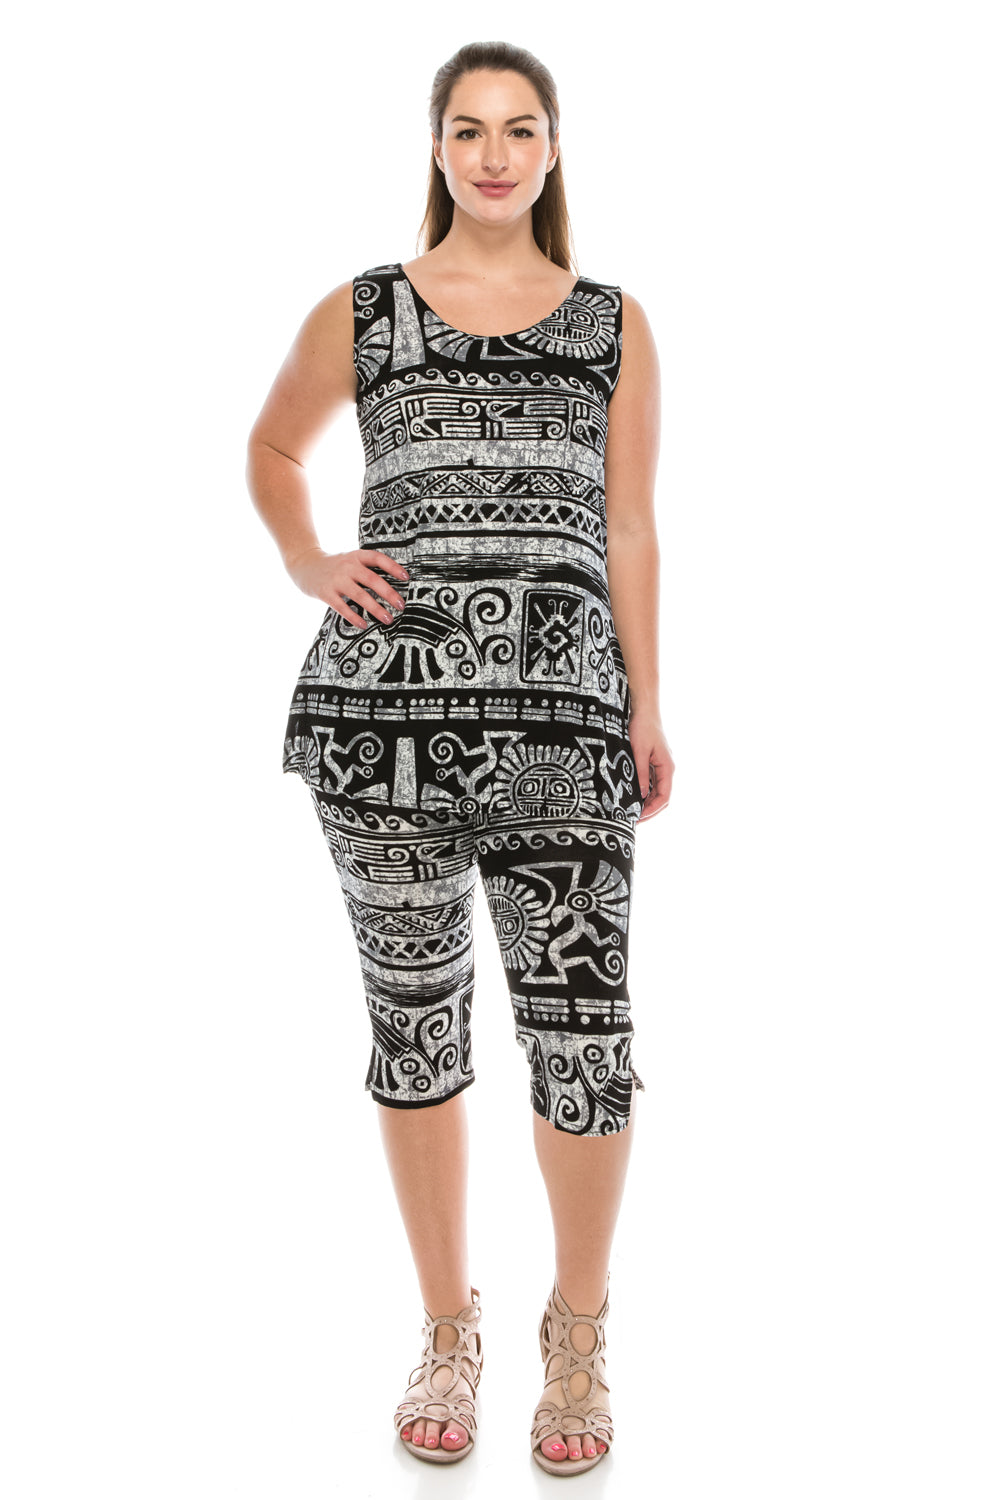 Jostar Women's Stretchy Tank Capri Pant Set Print, 902BN-TP-W901 - Jostar Online